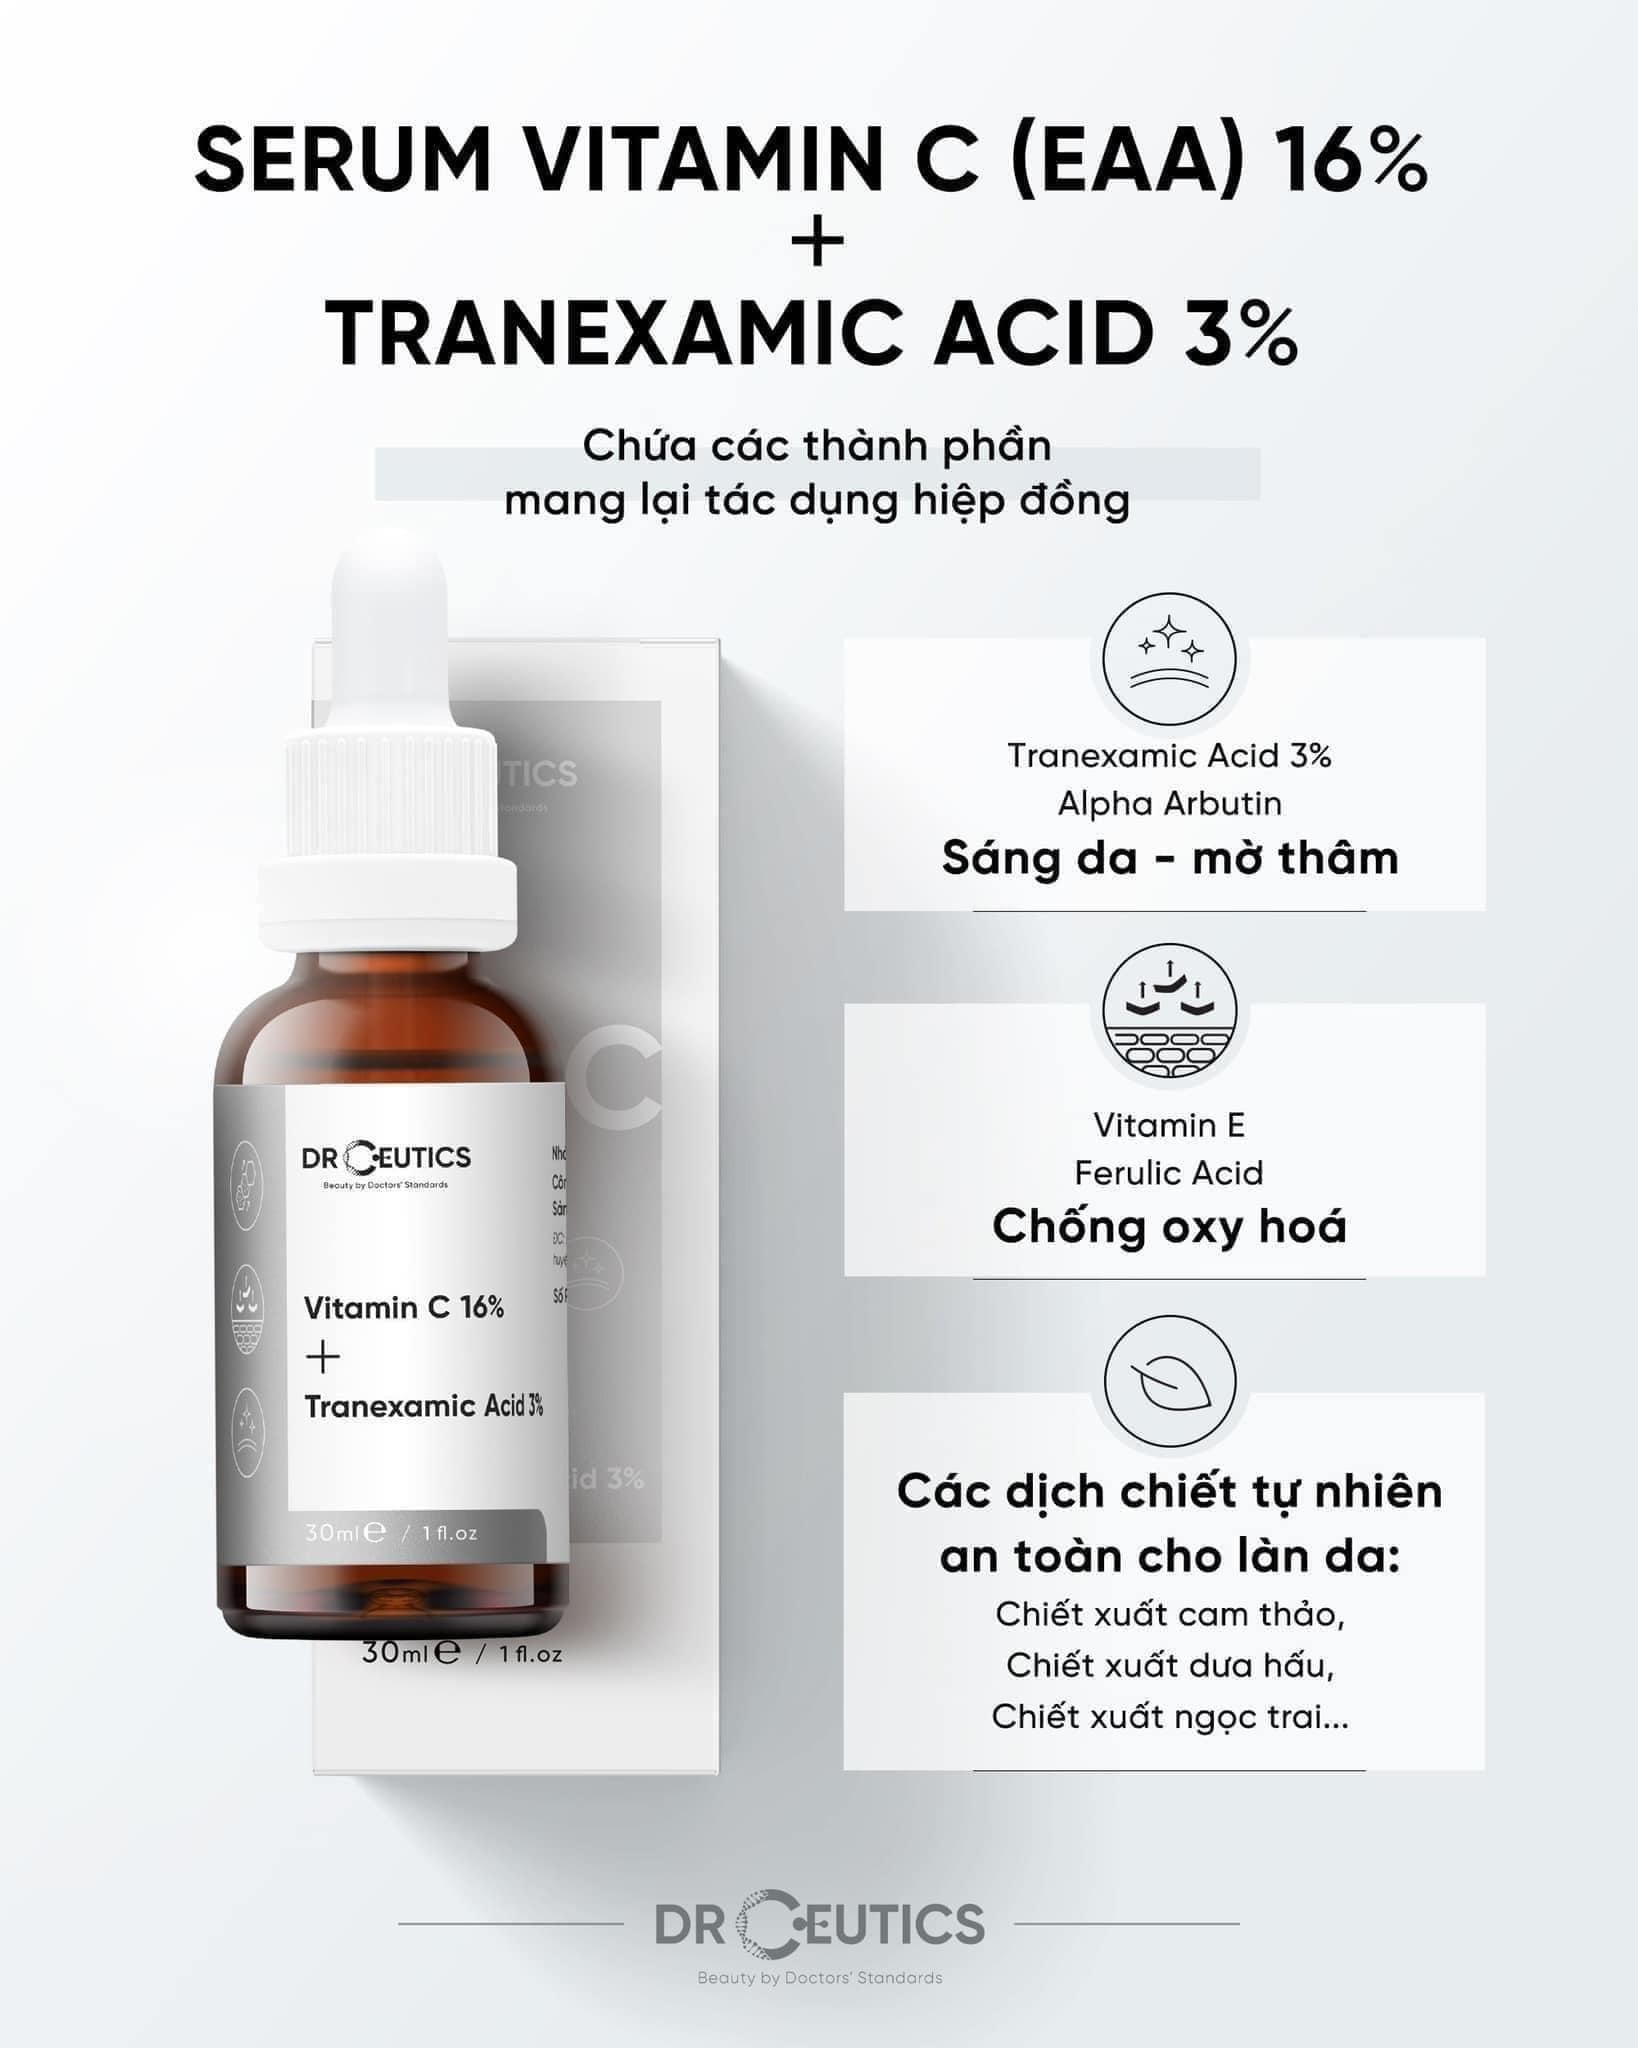  DrCeutics Vitamin C 16% Và Tranexamic Acid 3%